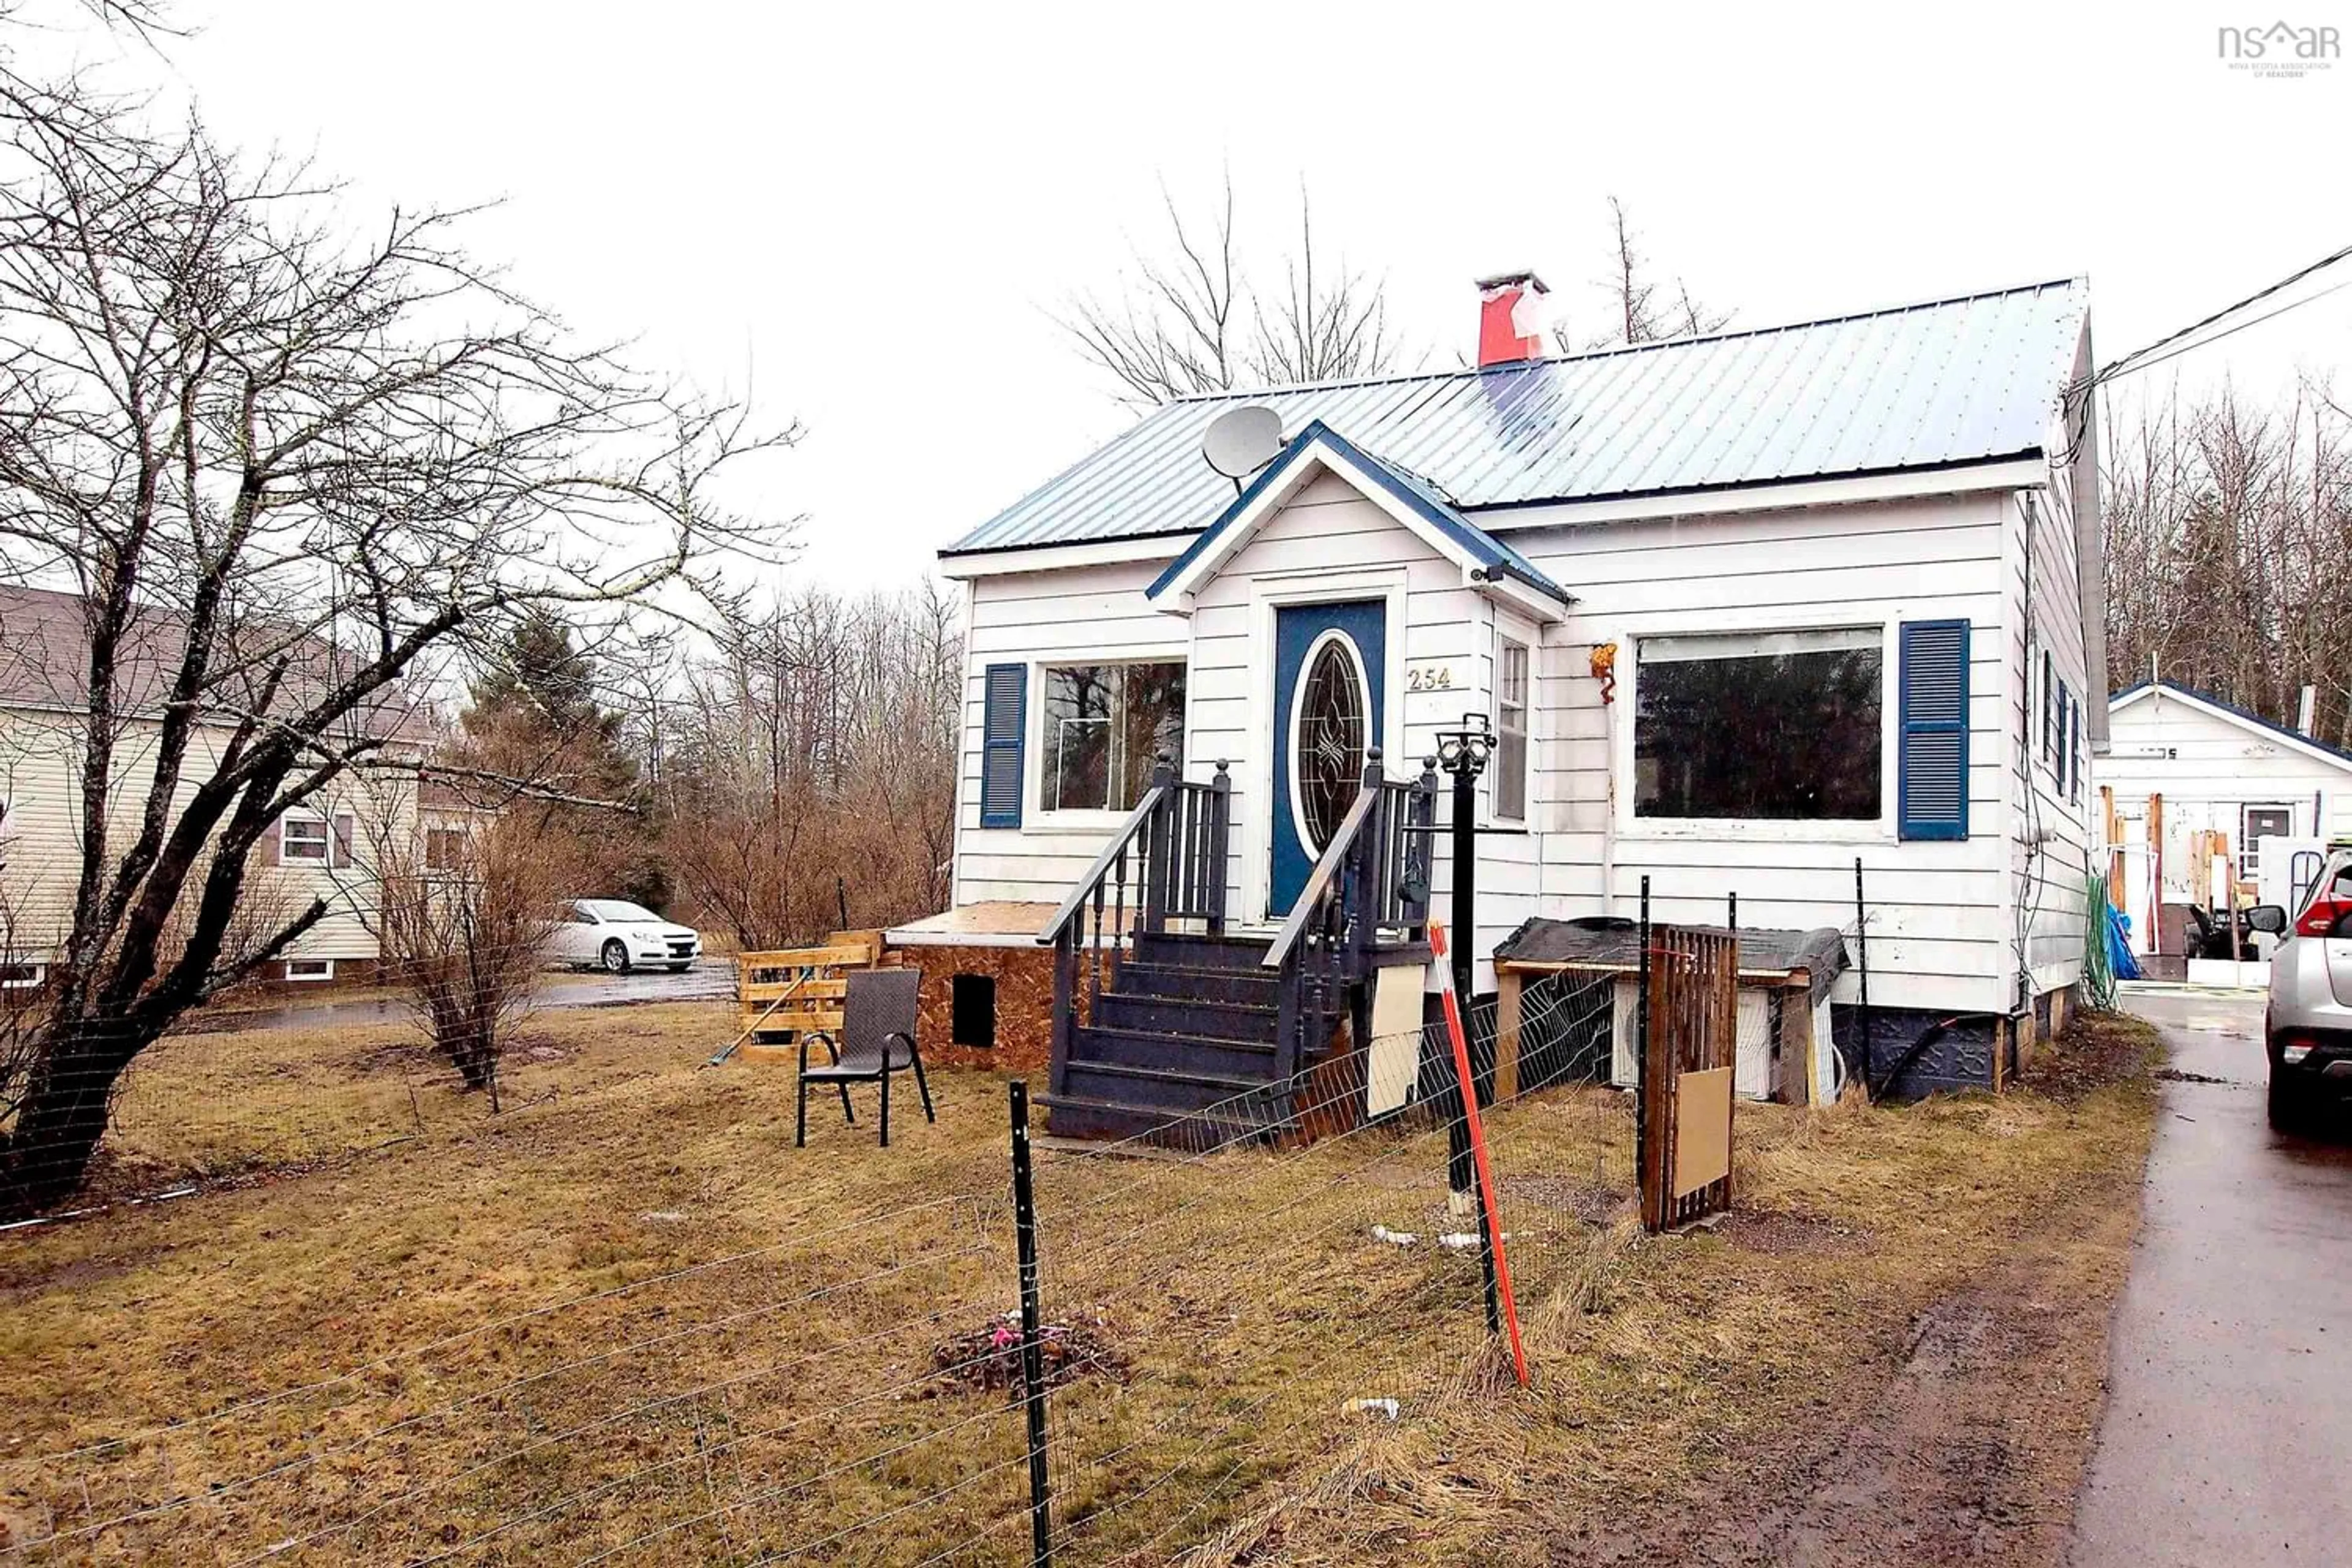 Cottage for 254 Mcgee St, Springhill Nova Scotia B0M 1X0